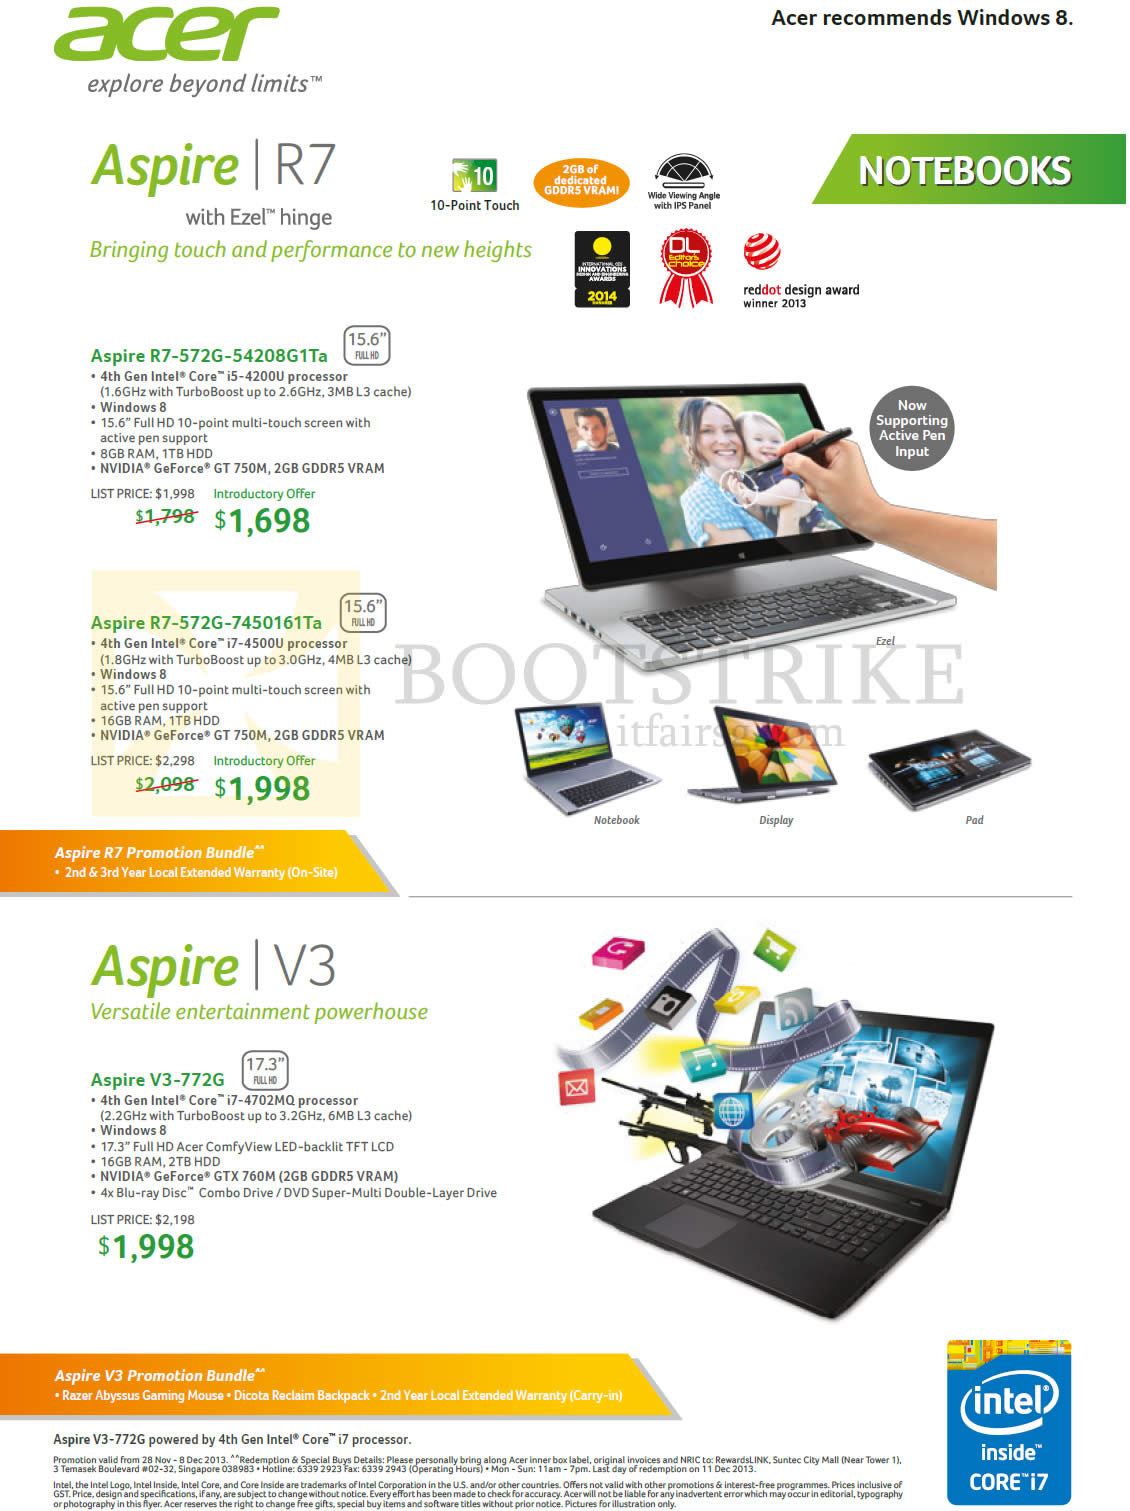 SITEX 2013 price list image brochure of Acer Notebooks Aspire R7-572G-54208G1Ta, 7450161Ta, Aspire V3-772G